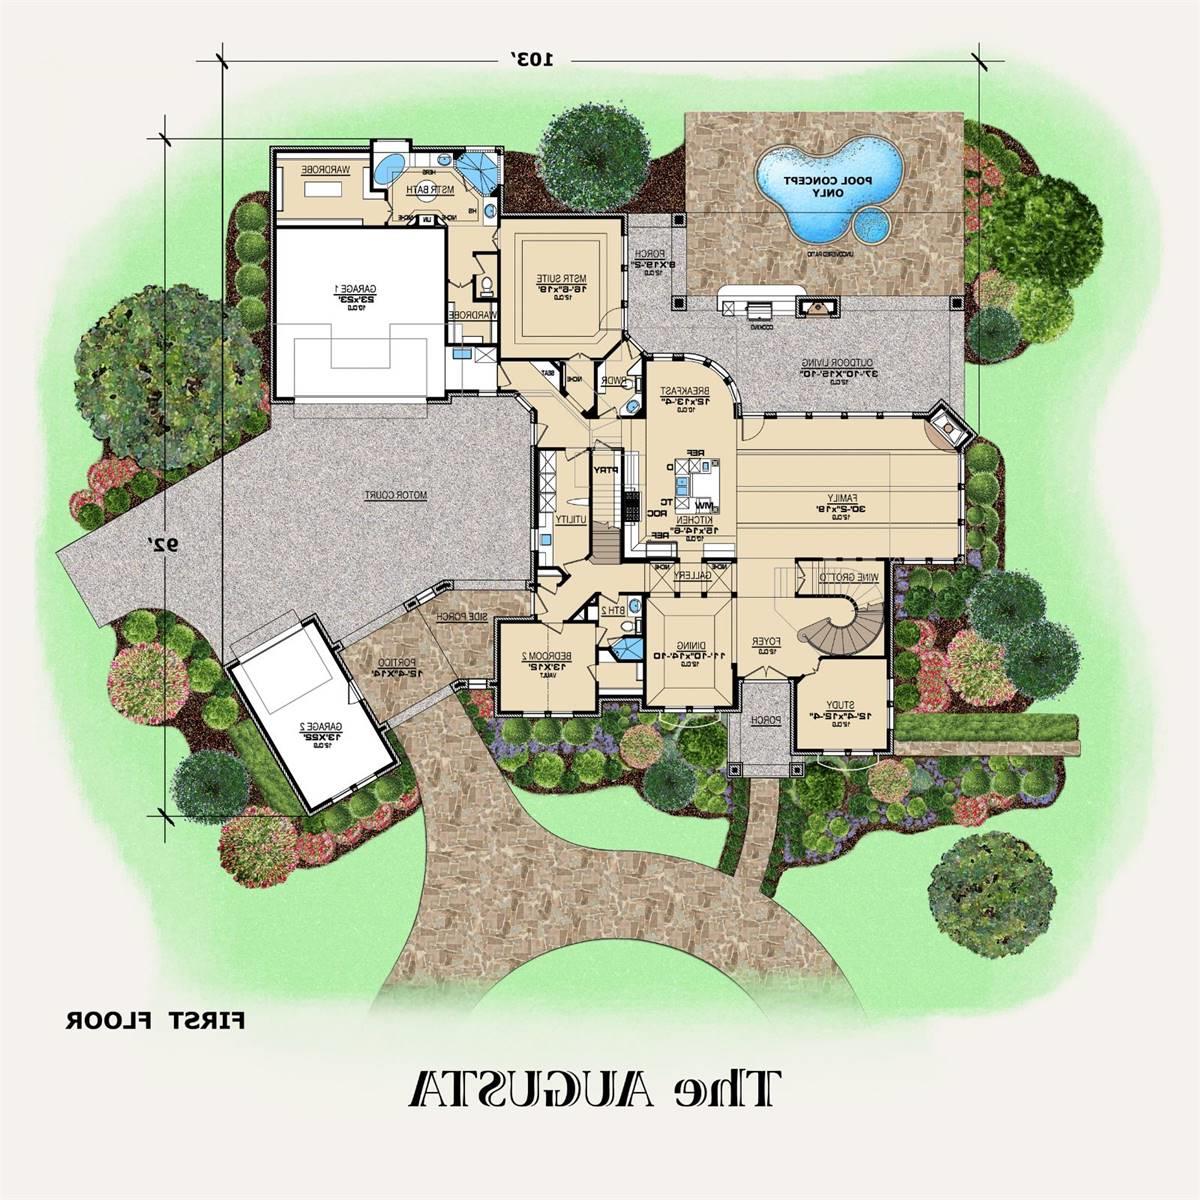 1st Floor image of Augusta House Plan